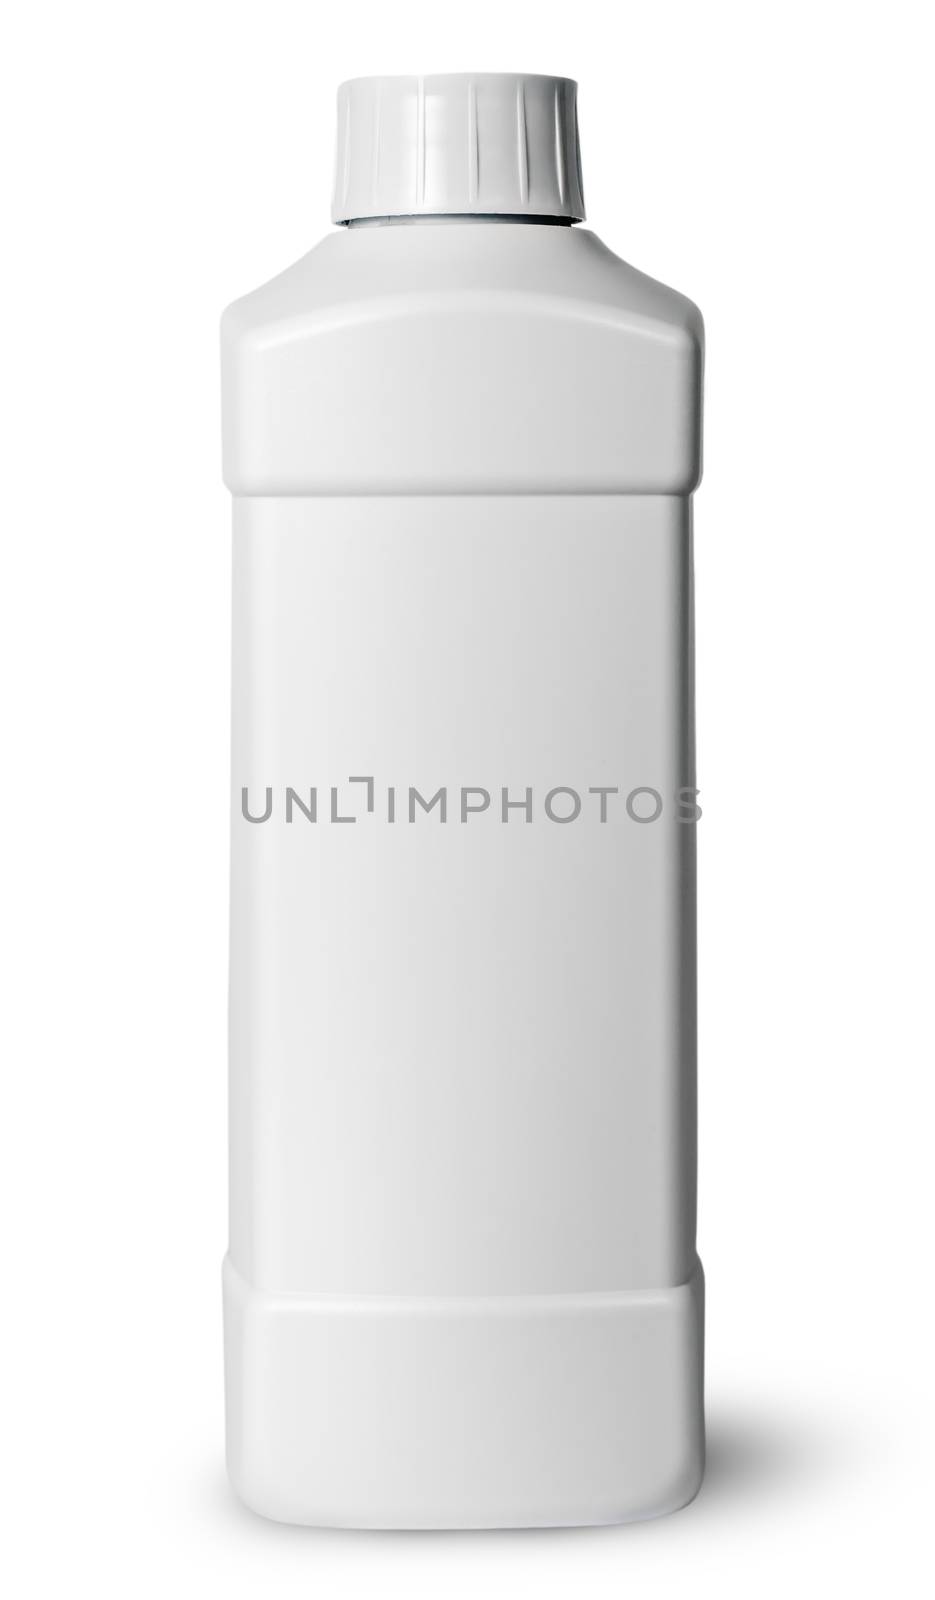 White plastic bottle of detergent by Cipariss